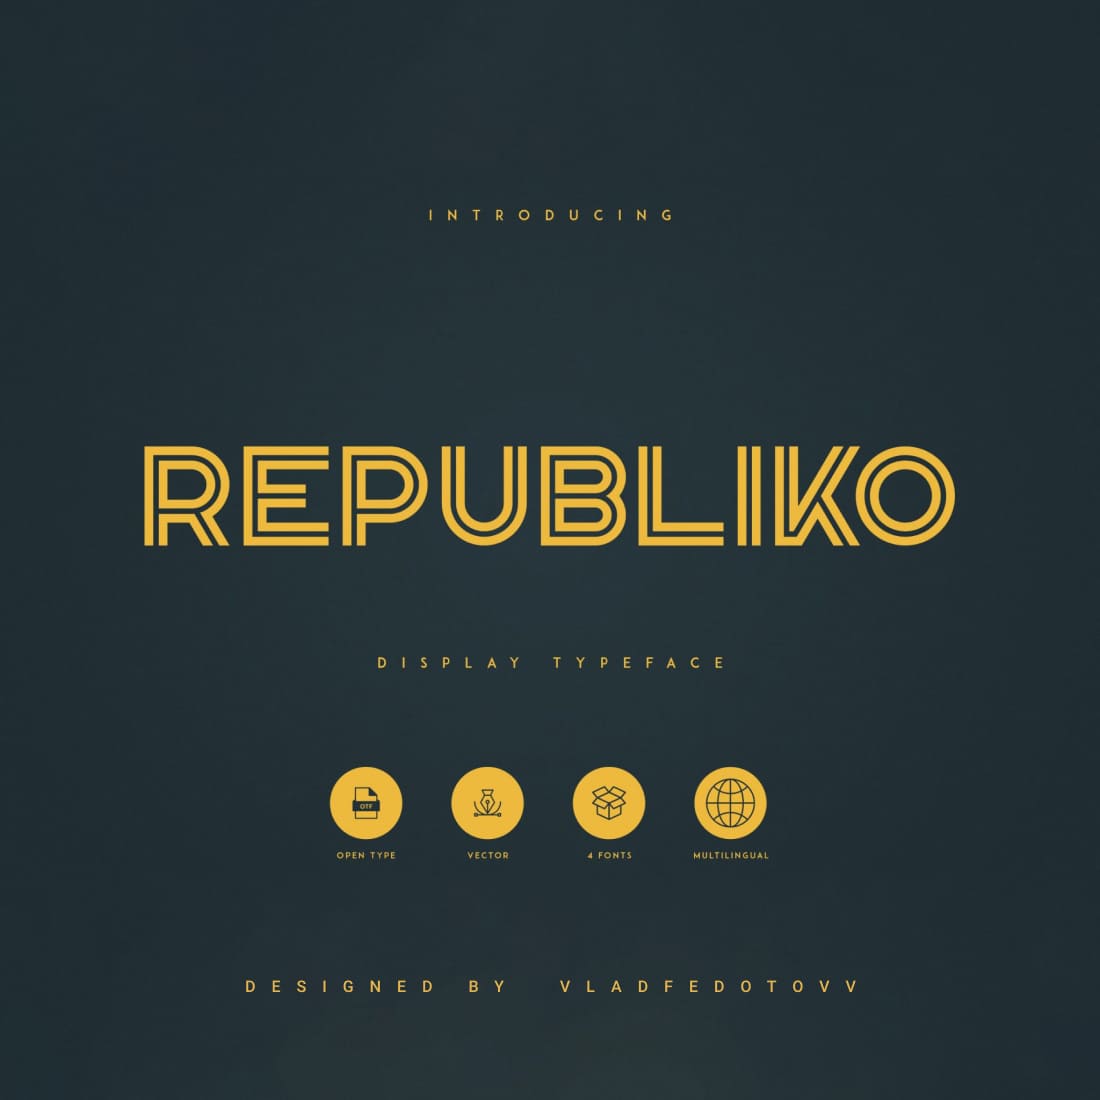 Republiko – Display Typeface cover image.